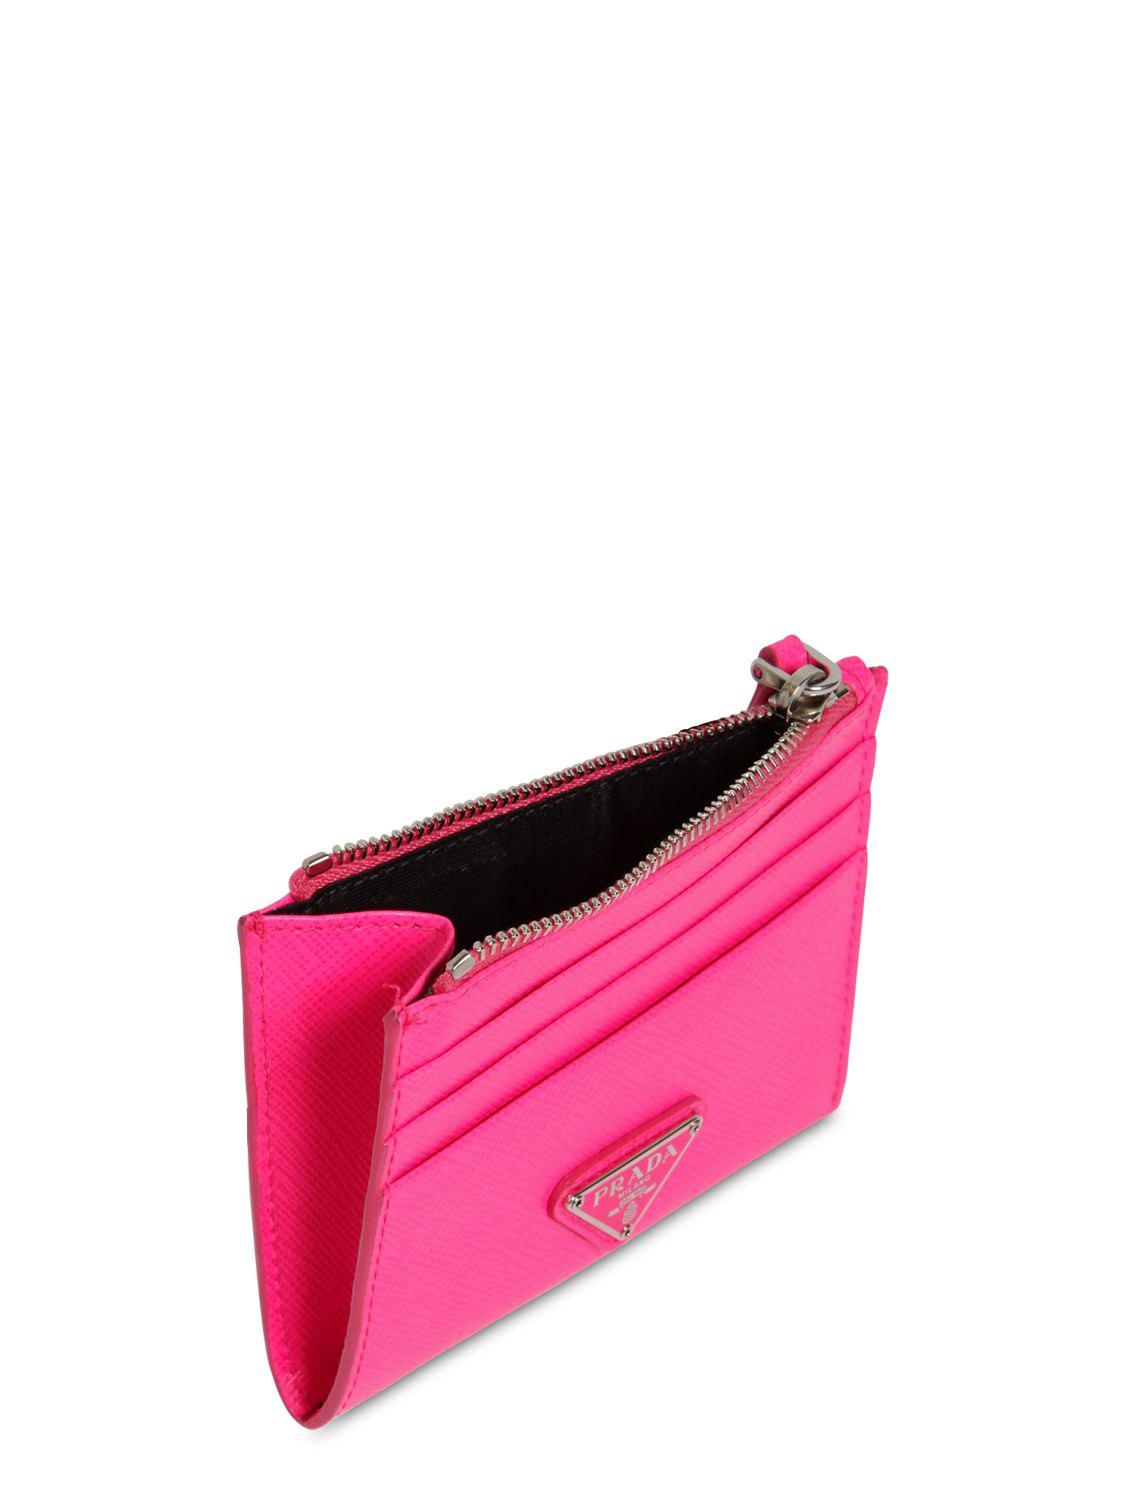 Prada Saffiano Leather Credit Card Holder in Neon Fuchsia (Pink 